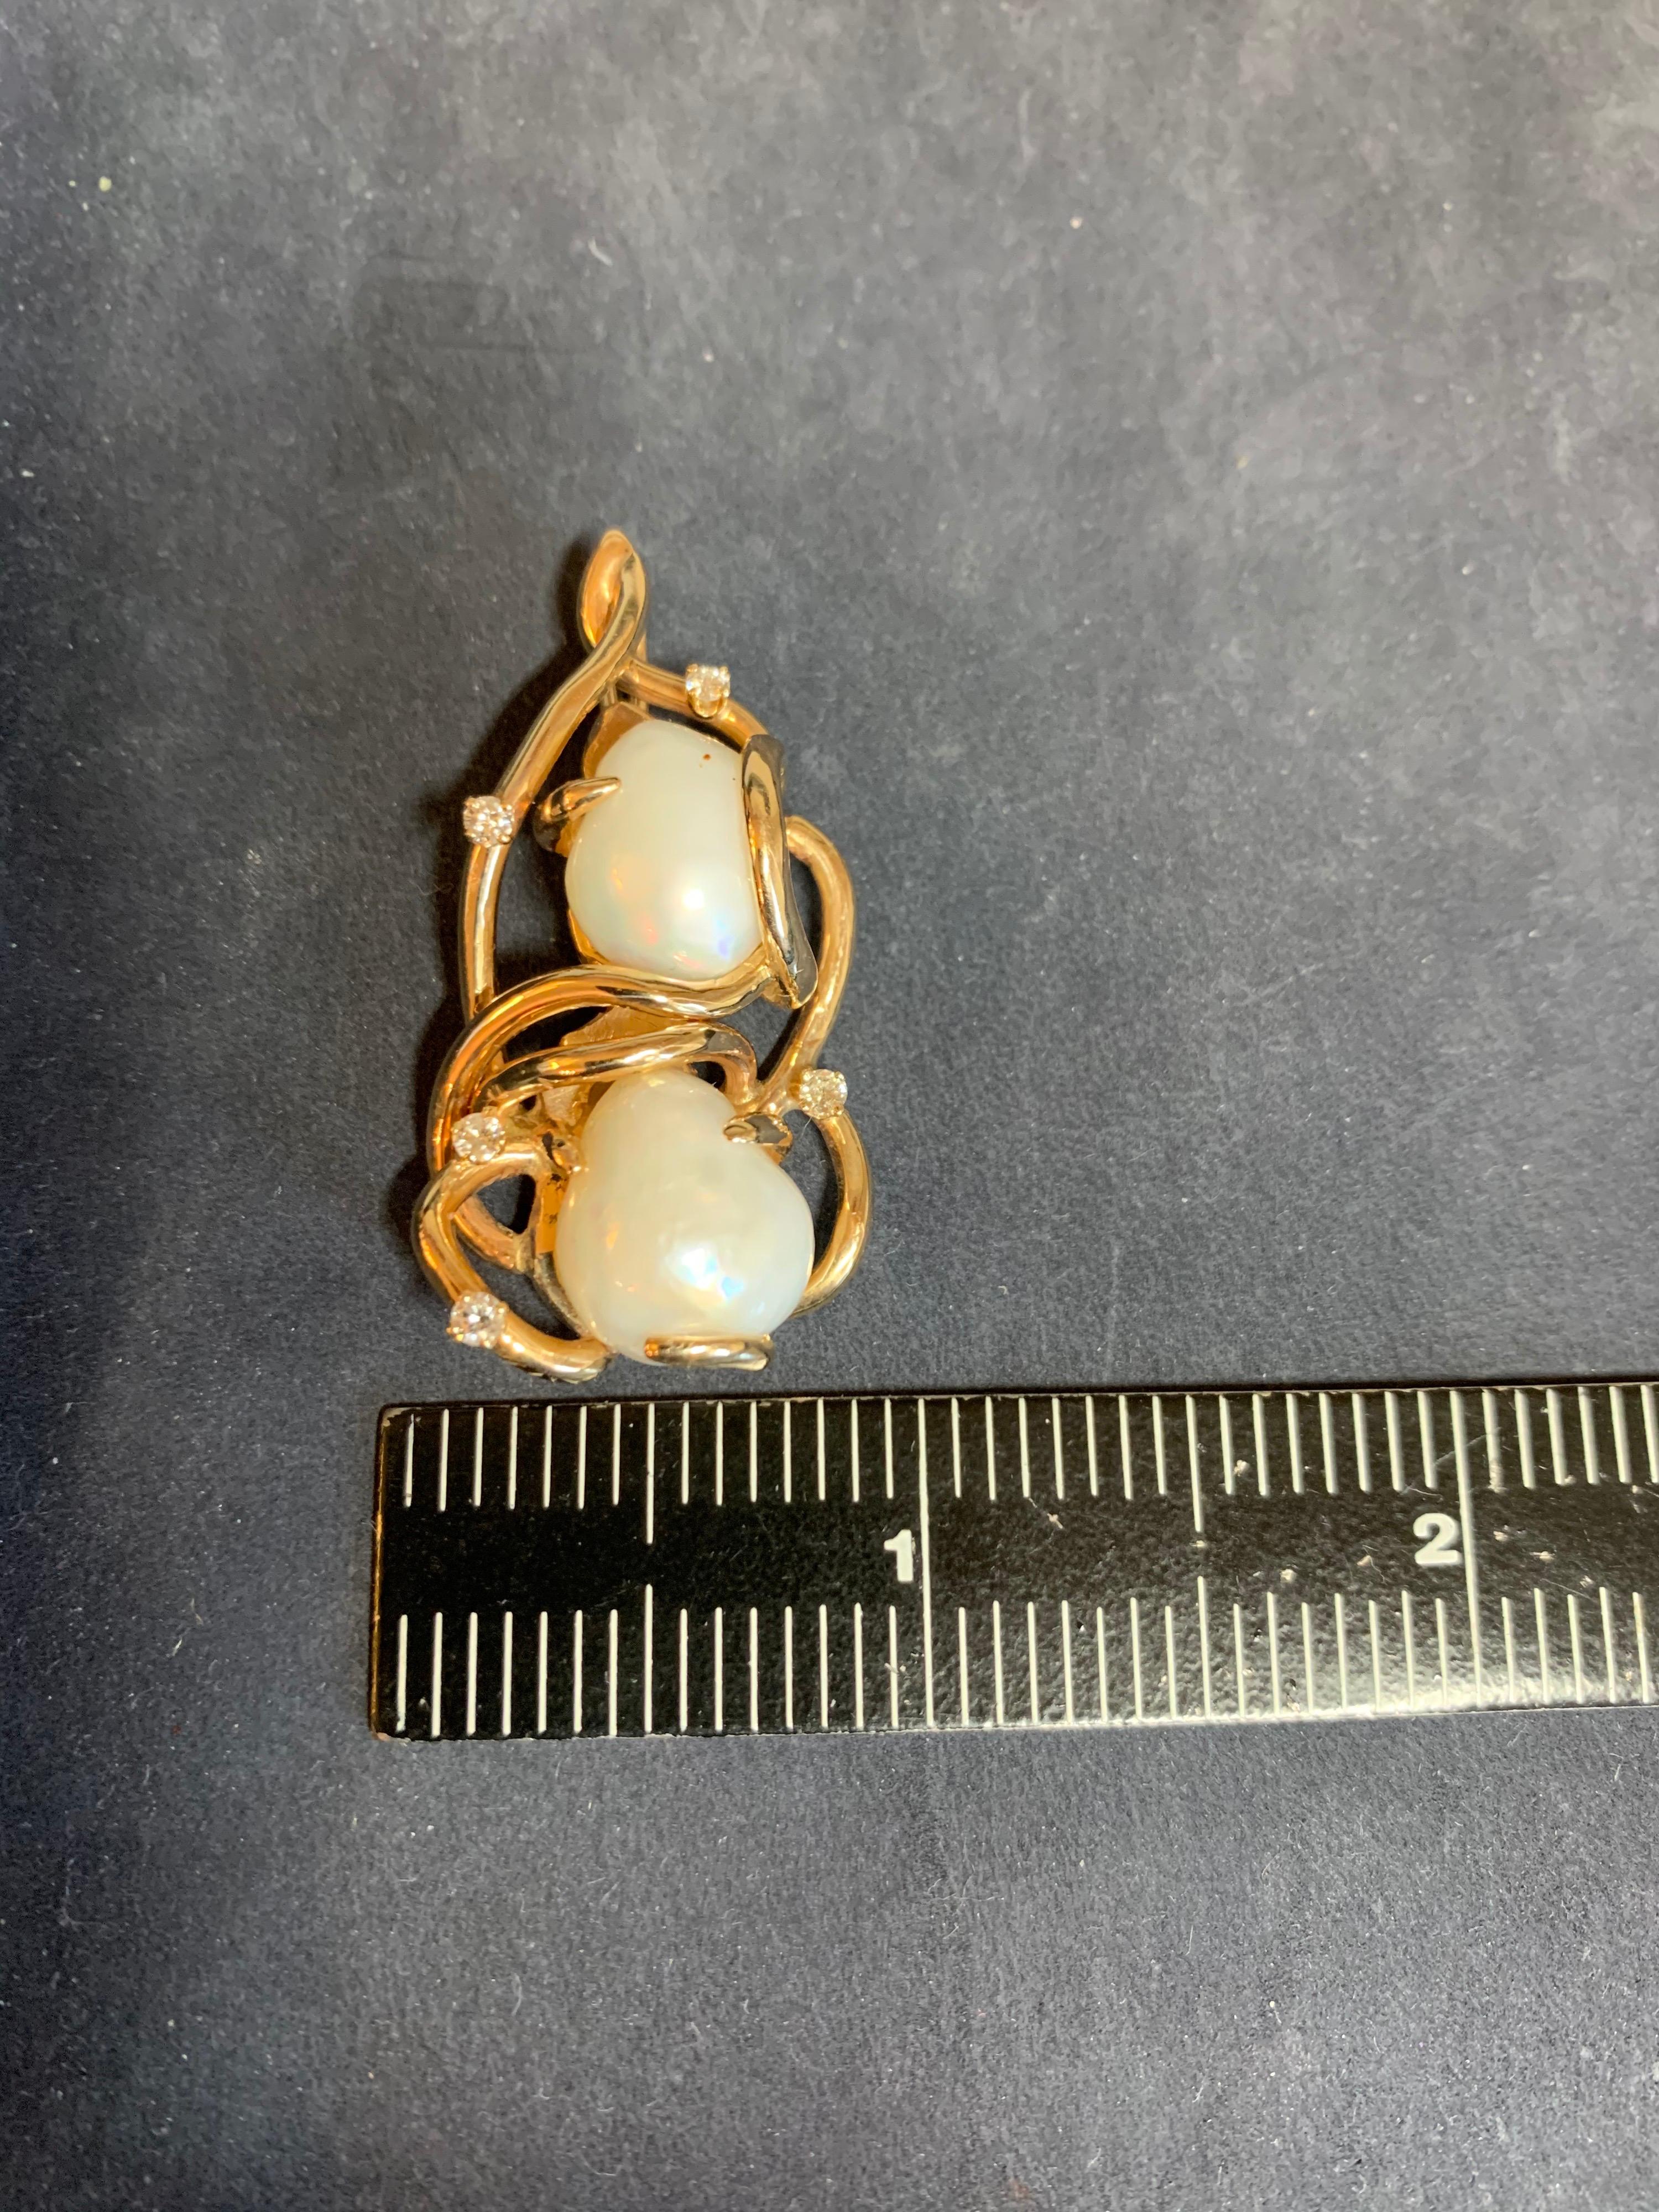 Retro Gold Pendant 0.20 Carat Natural Diamond And Pearl Hand Craft, circa 1980 For Sale 1